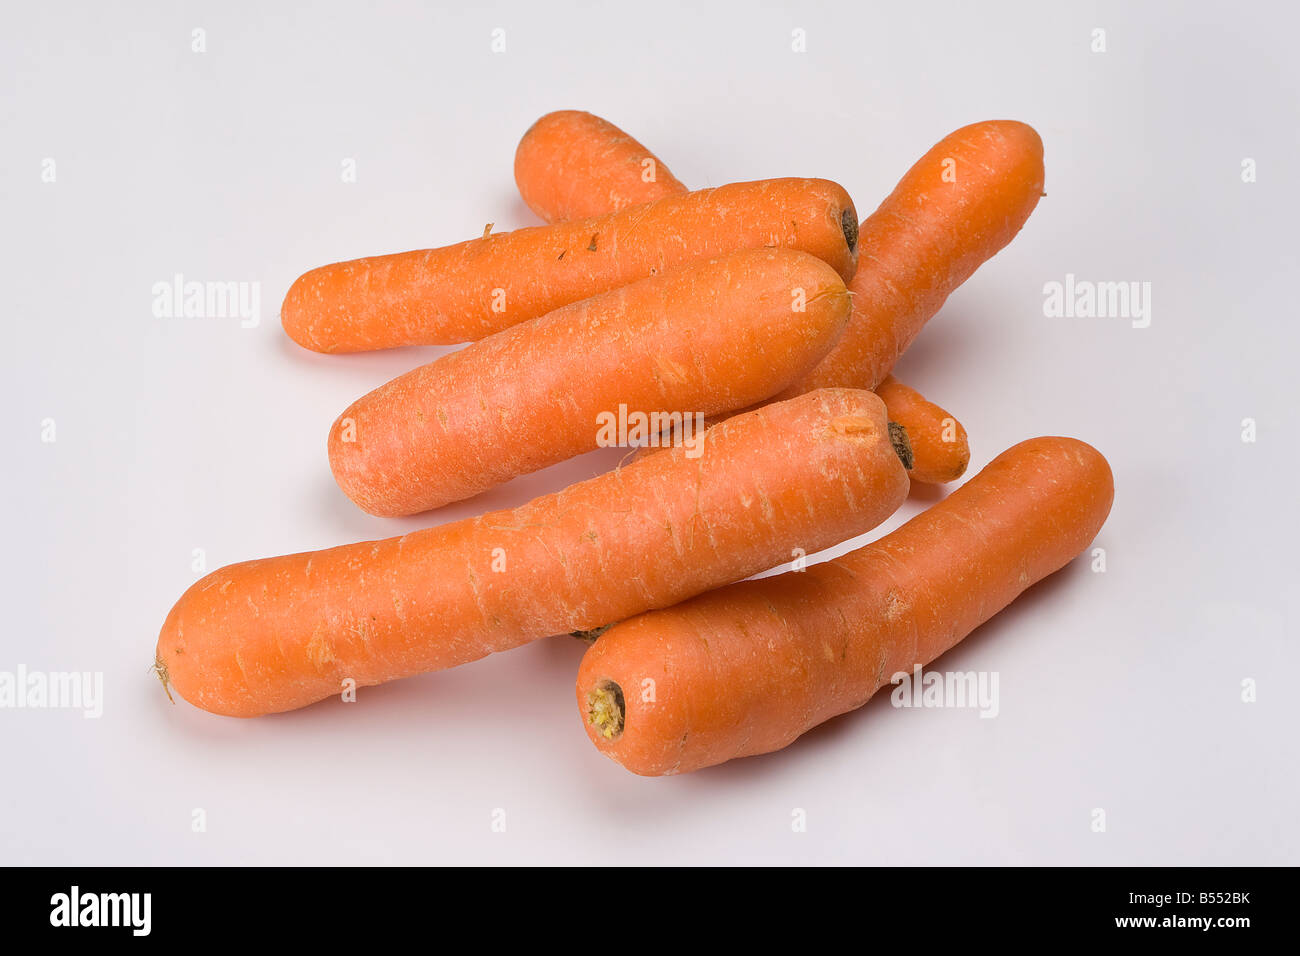 A few carrots Stock Photo